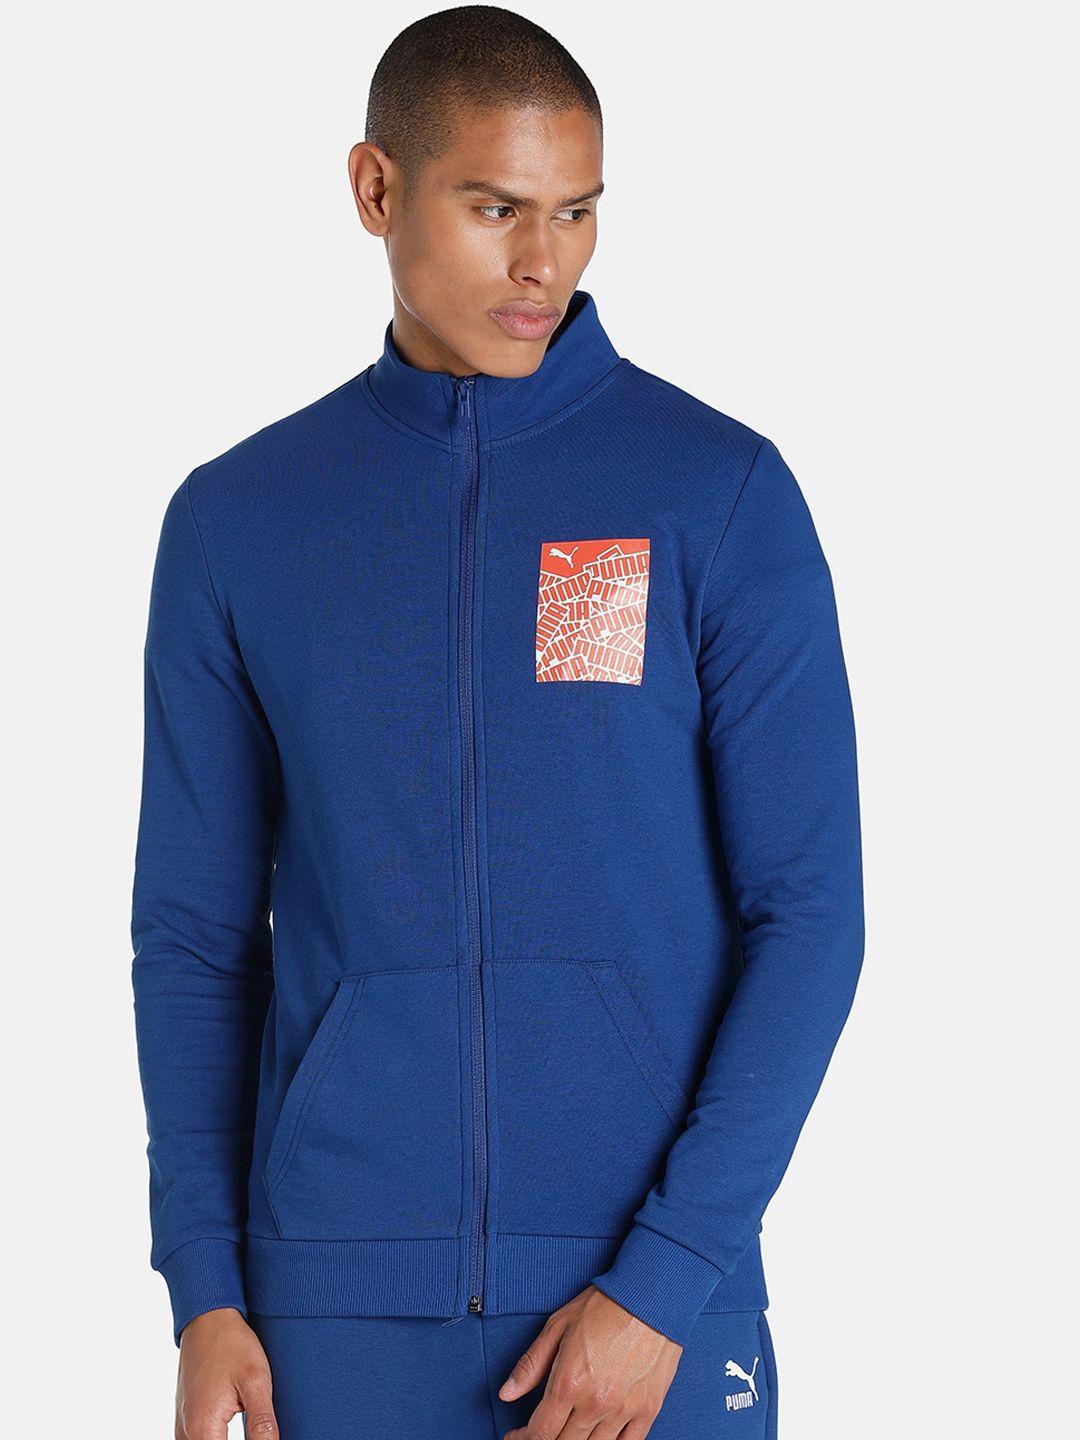 puma-men-blue-graphic-logo-jacket